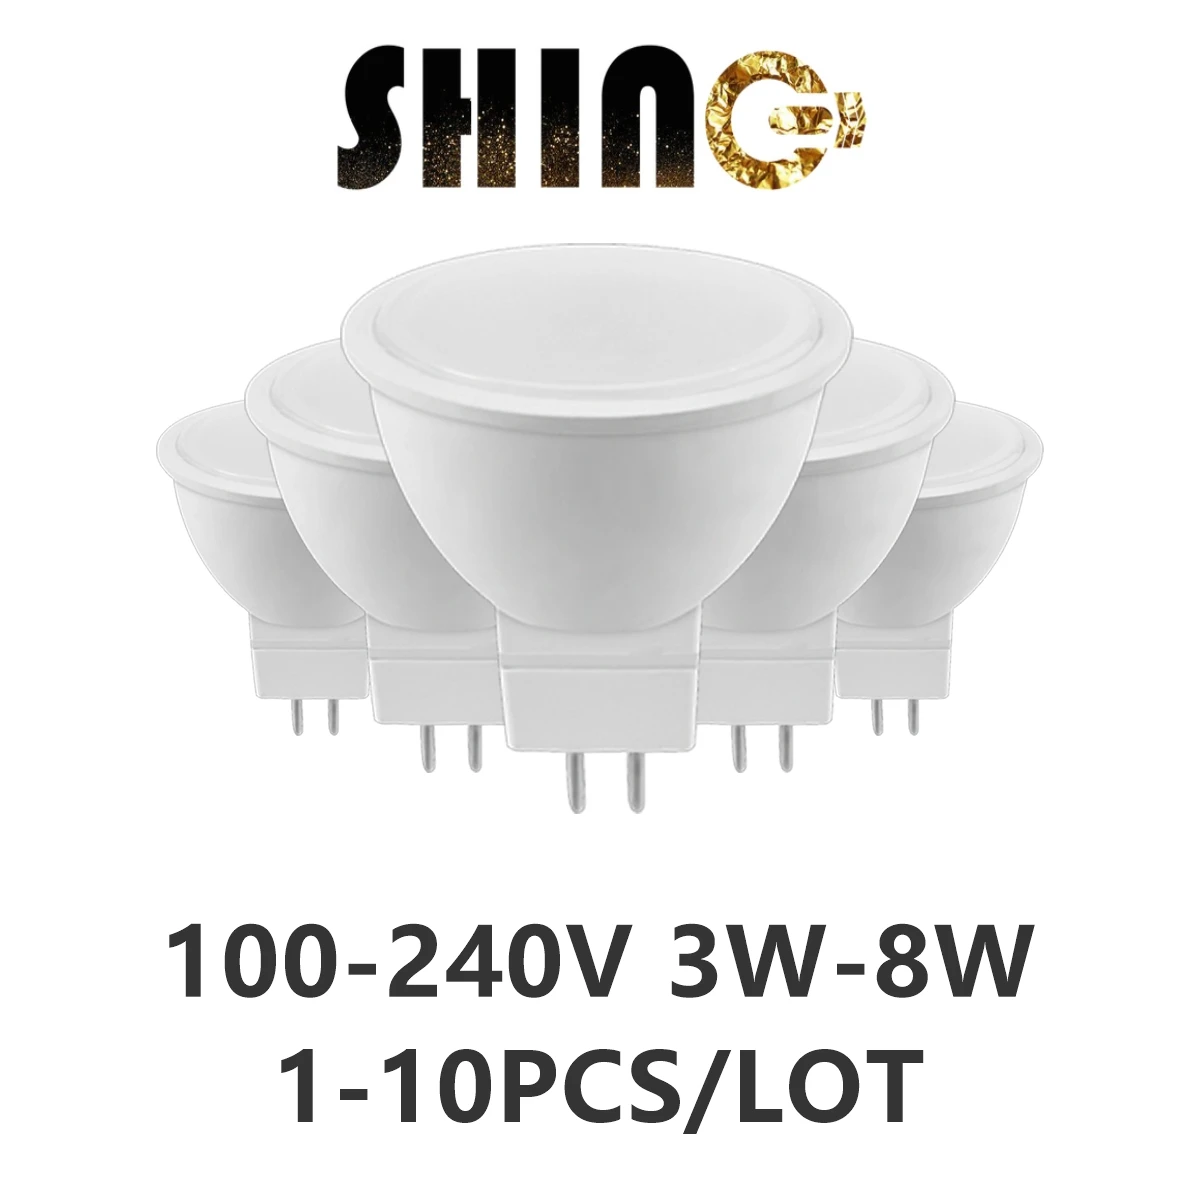 

1-10pcs Factory direct LED spot light MR16 100V-240V 3W 5W 6W 7W 8W high bright warm white light replace 50W 100W halogen lamp